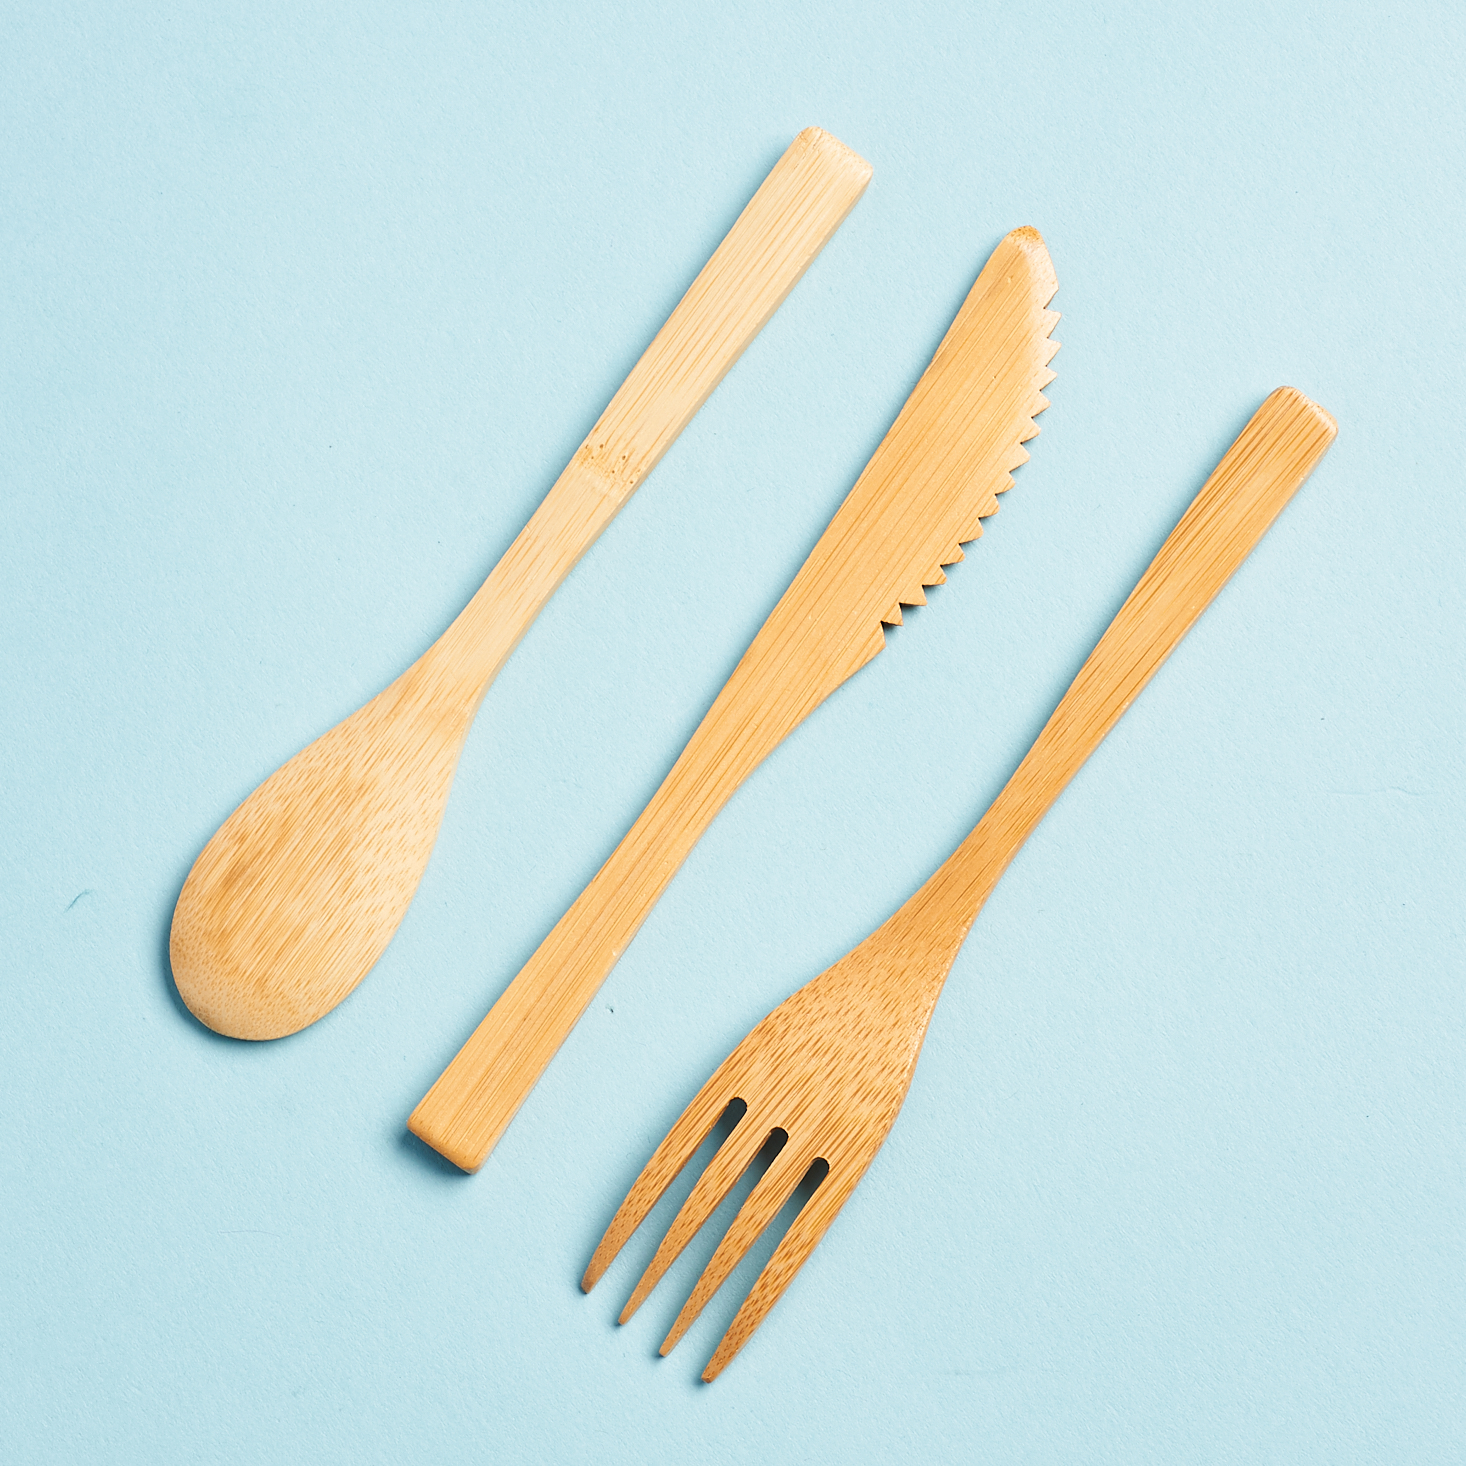 underside of bamboo utensils